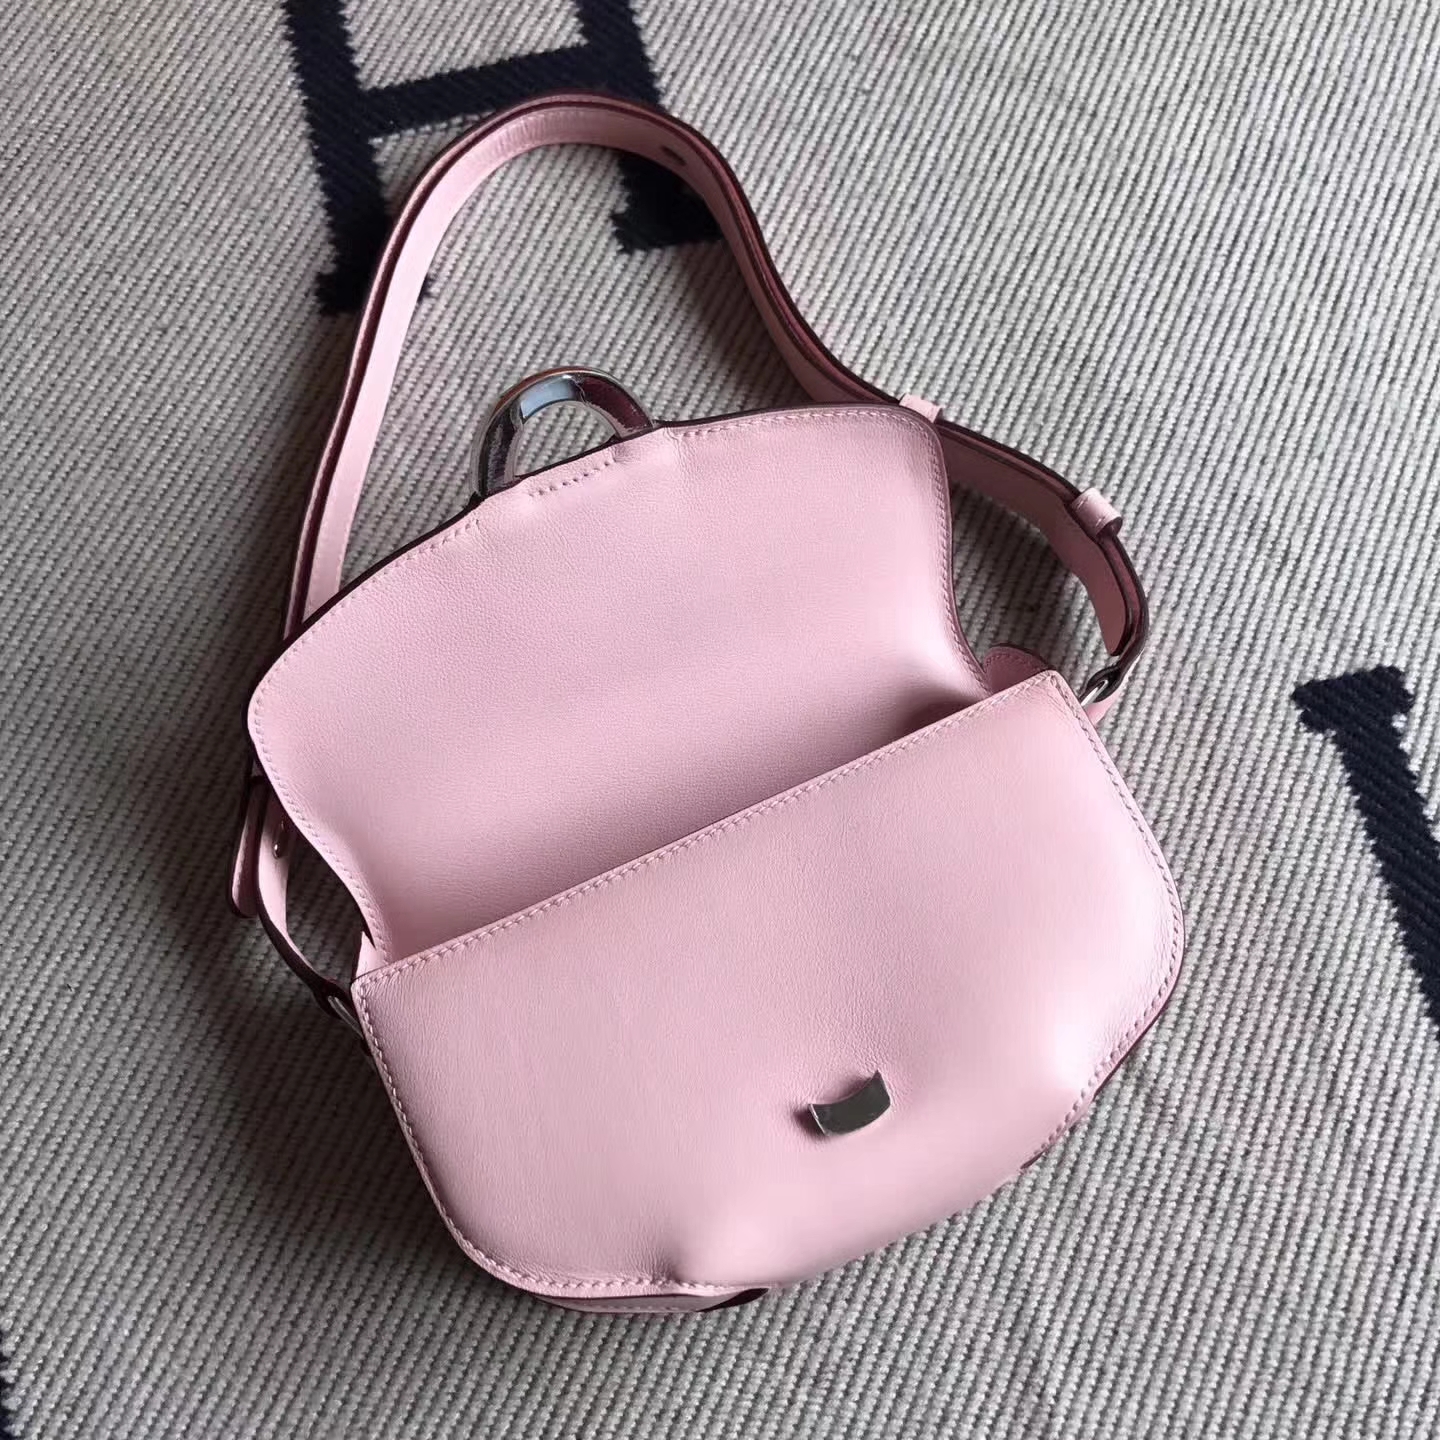 New Arrival Hermes 3Q New Pink Swift Calfskin Cherche Midi Bag20cm